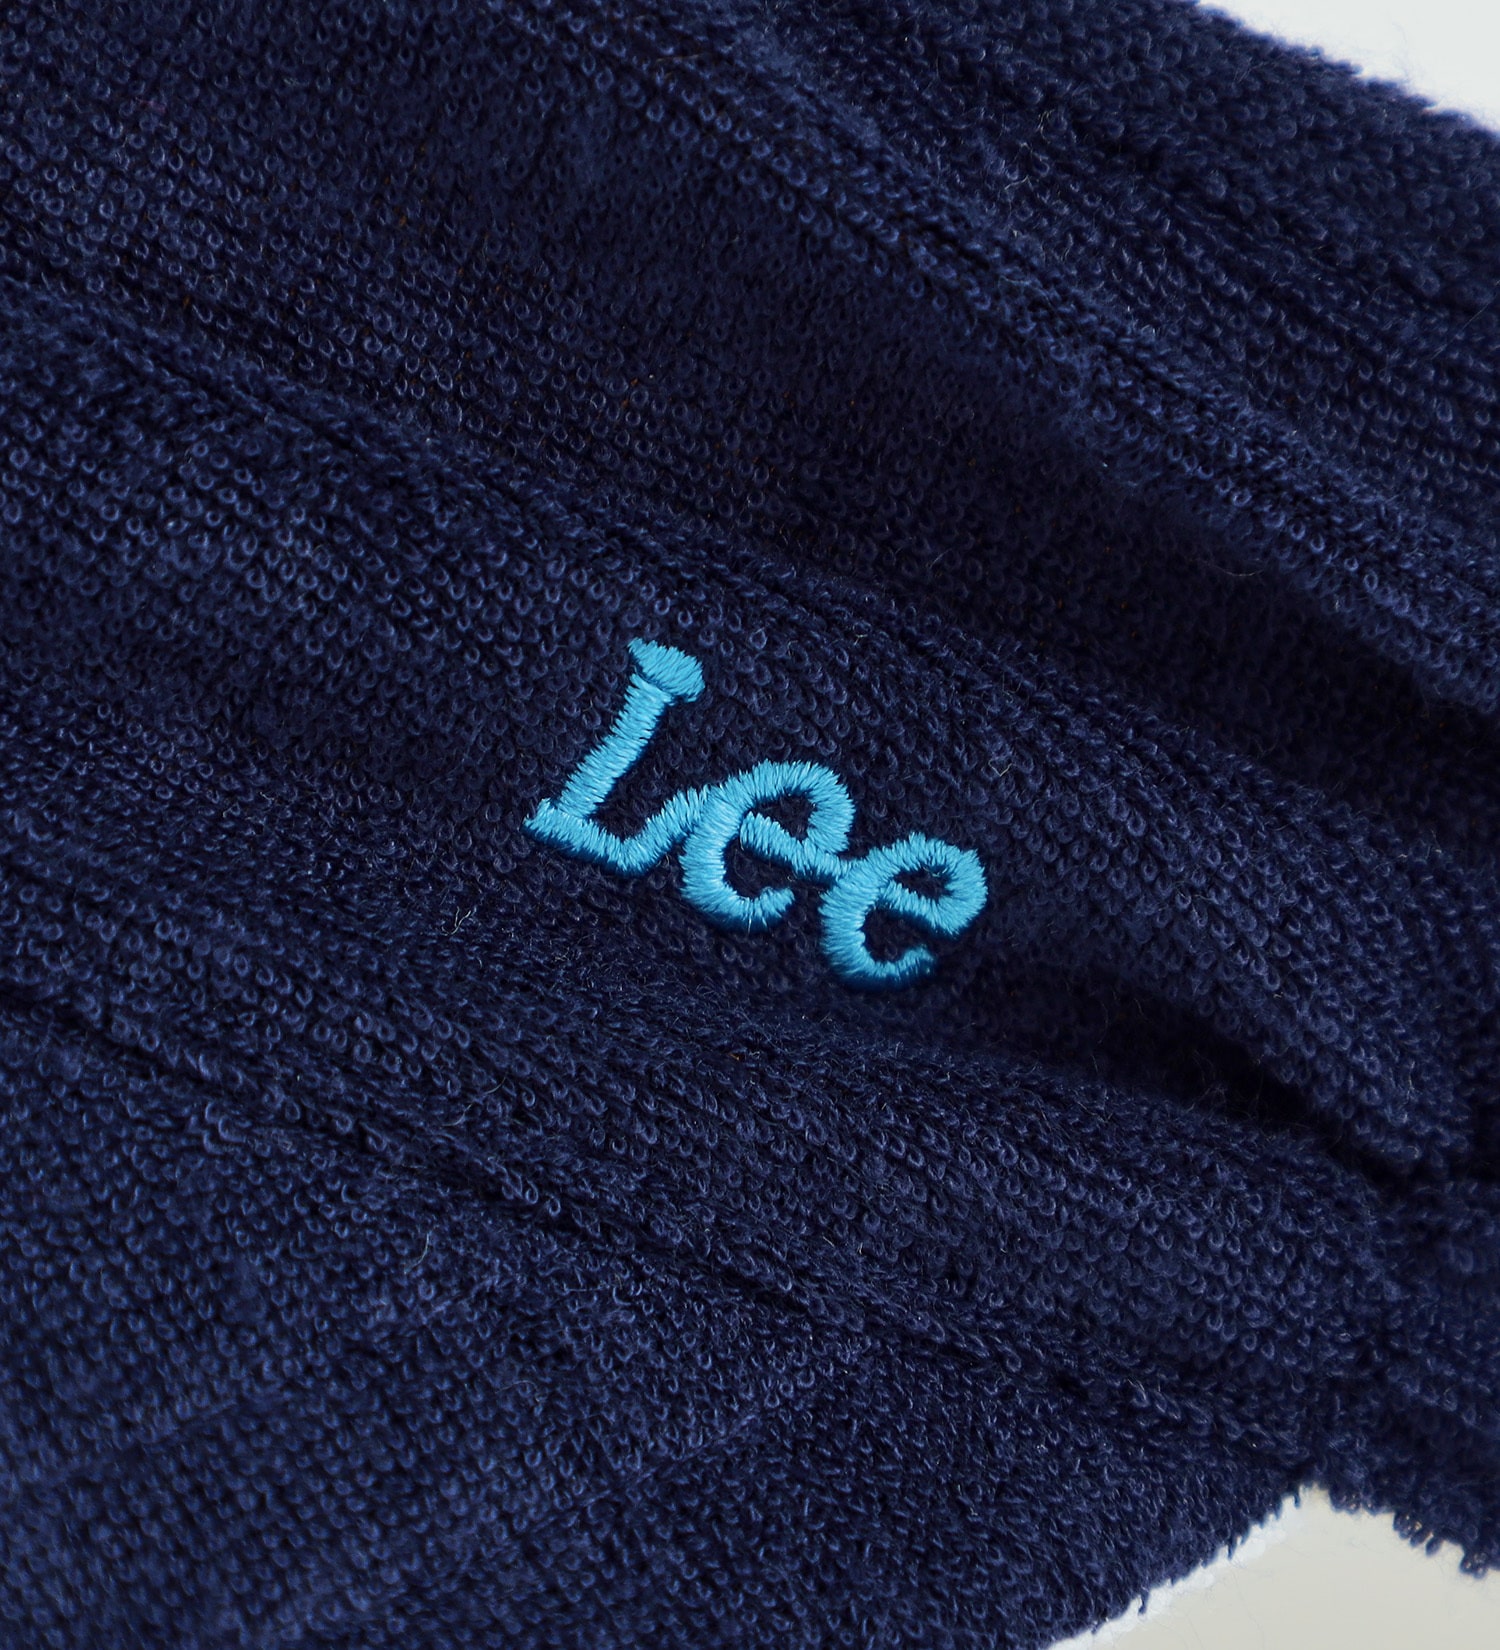 Lee(リー)の【Lee GOLF】パイルバイザー|帽子/サンバイザー/レインバイザー/レディース|ネイビー